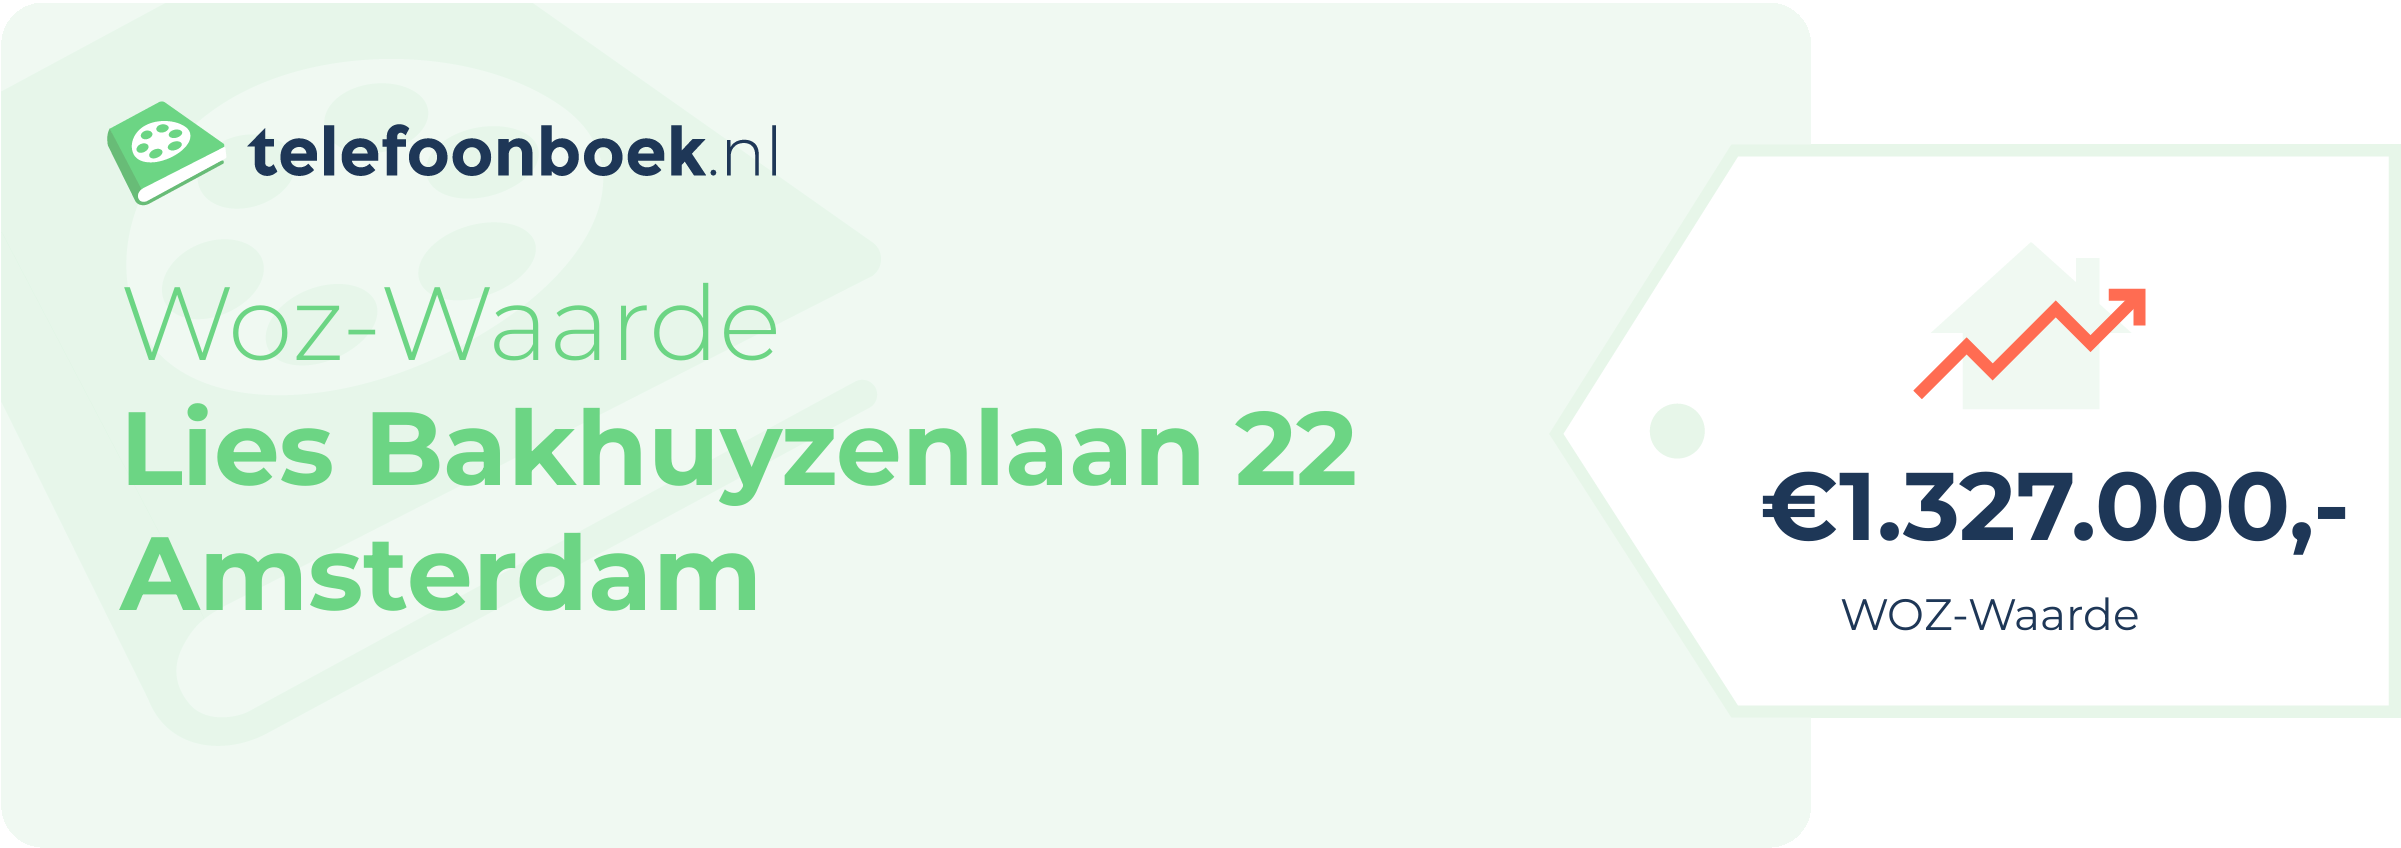 WOZ-waarde Lies Bakhuyzenlaan 22 Amsterdam